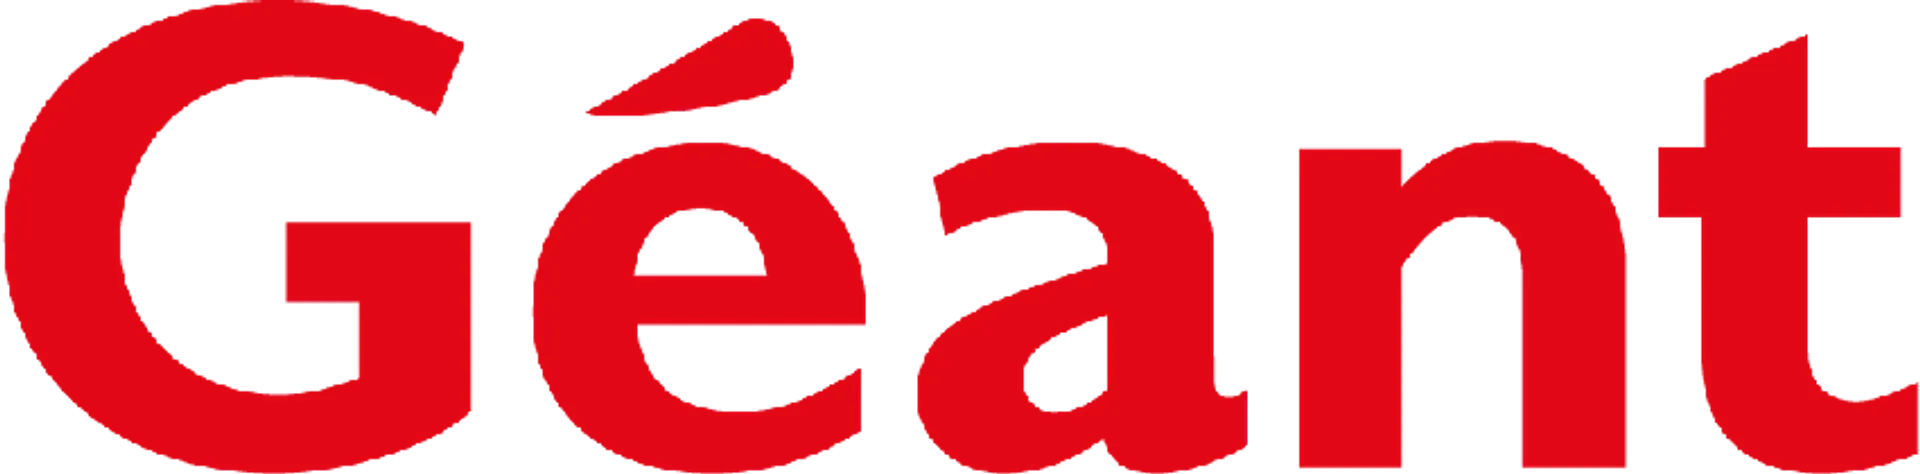 GEANT logo. Current catalogue